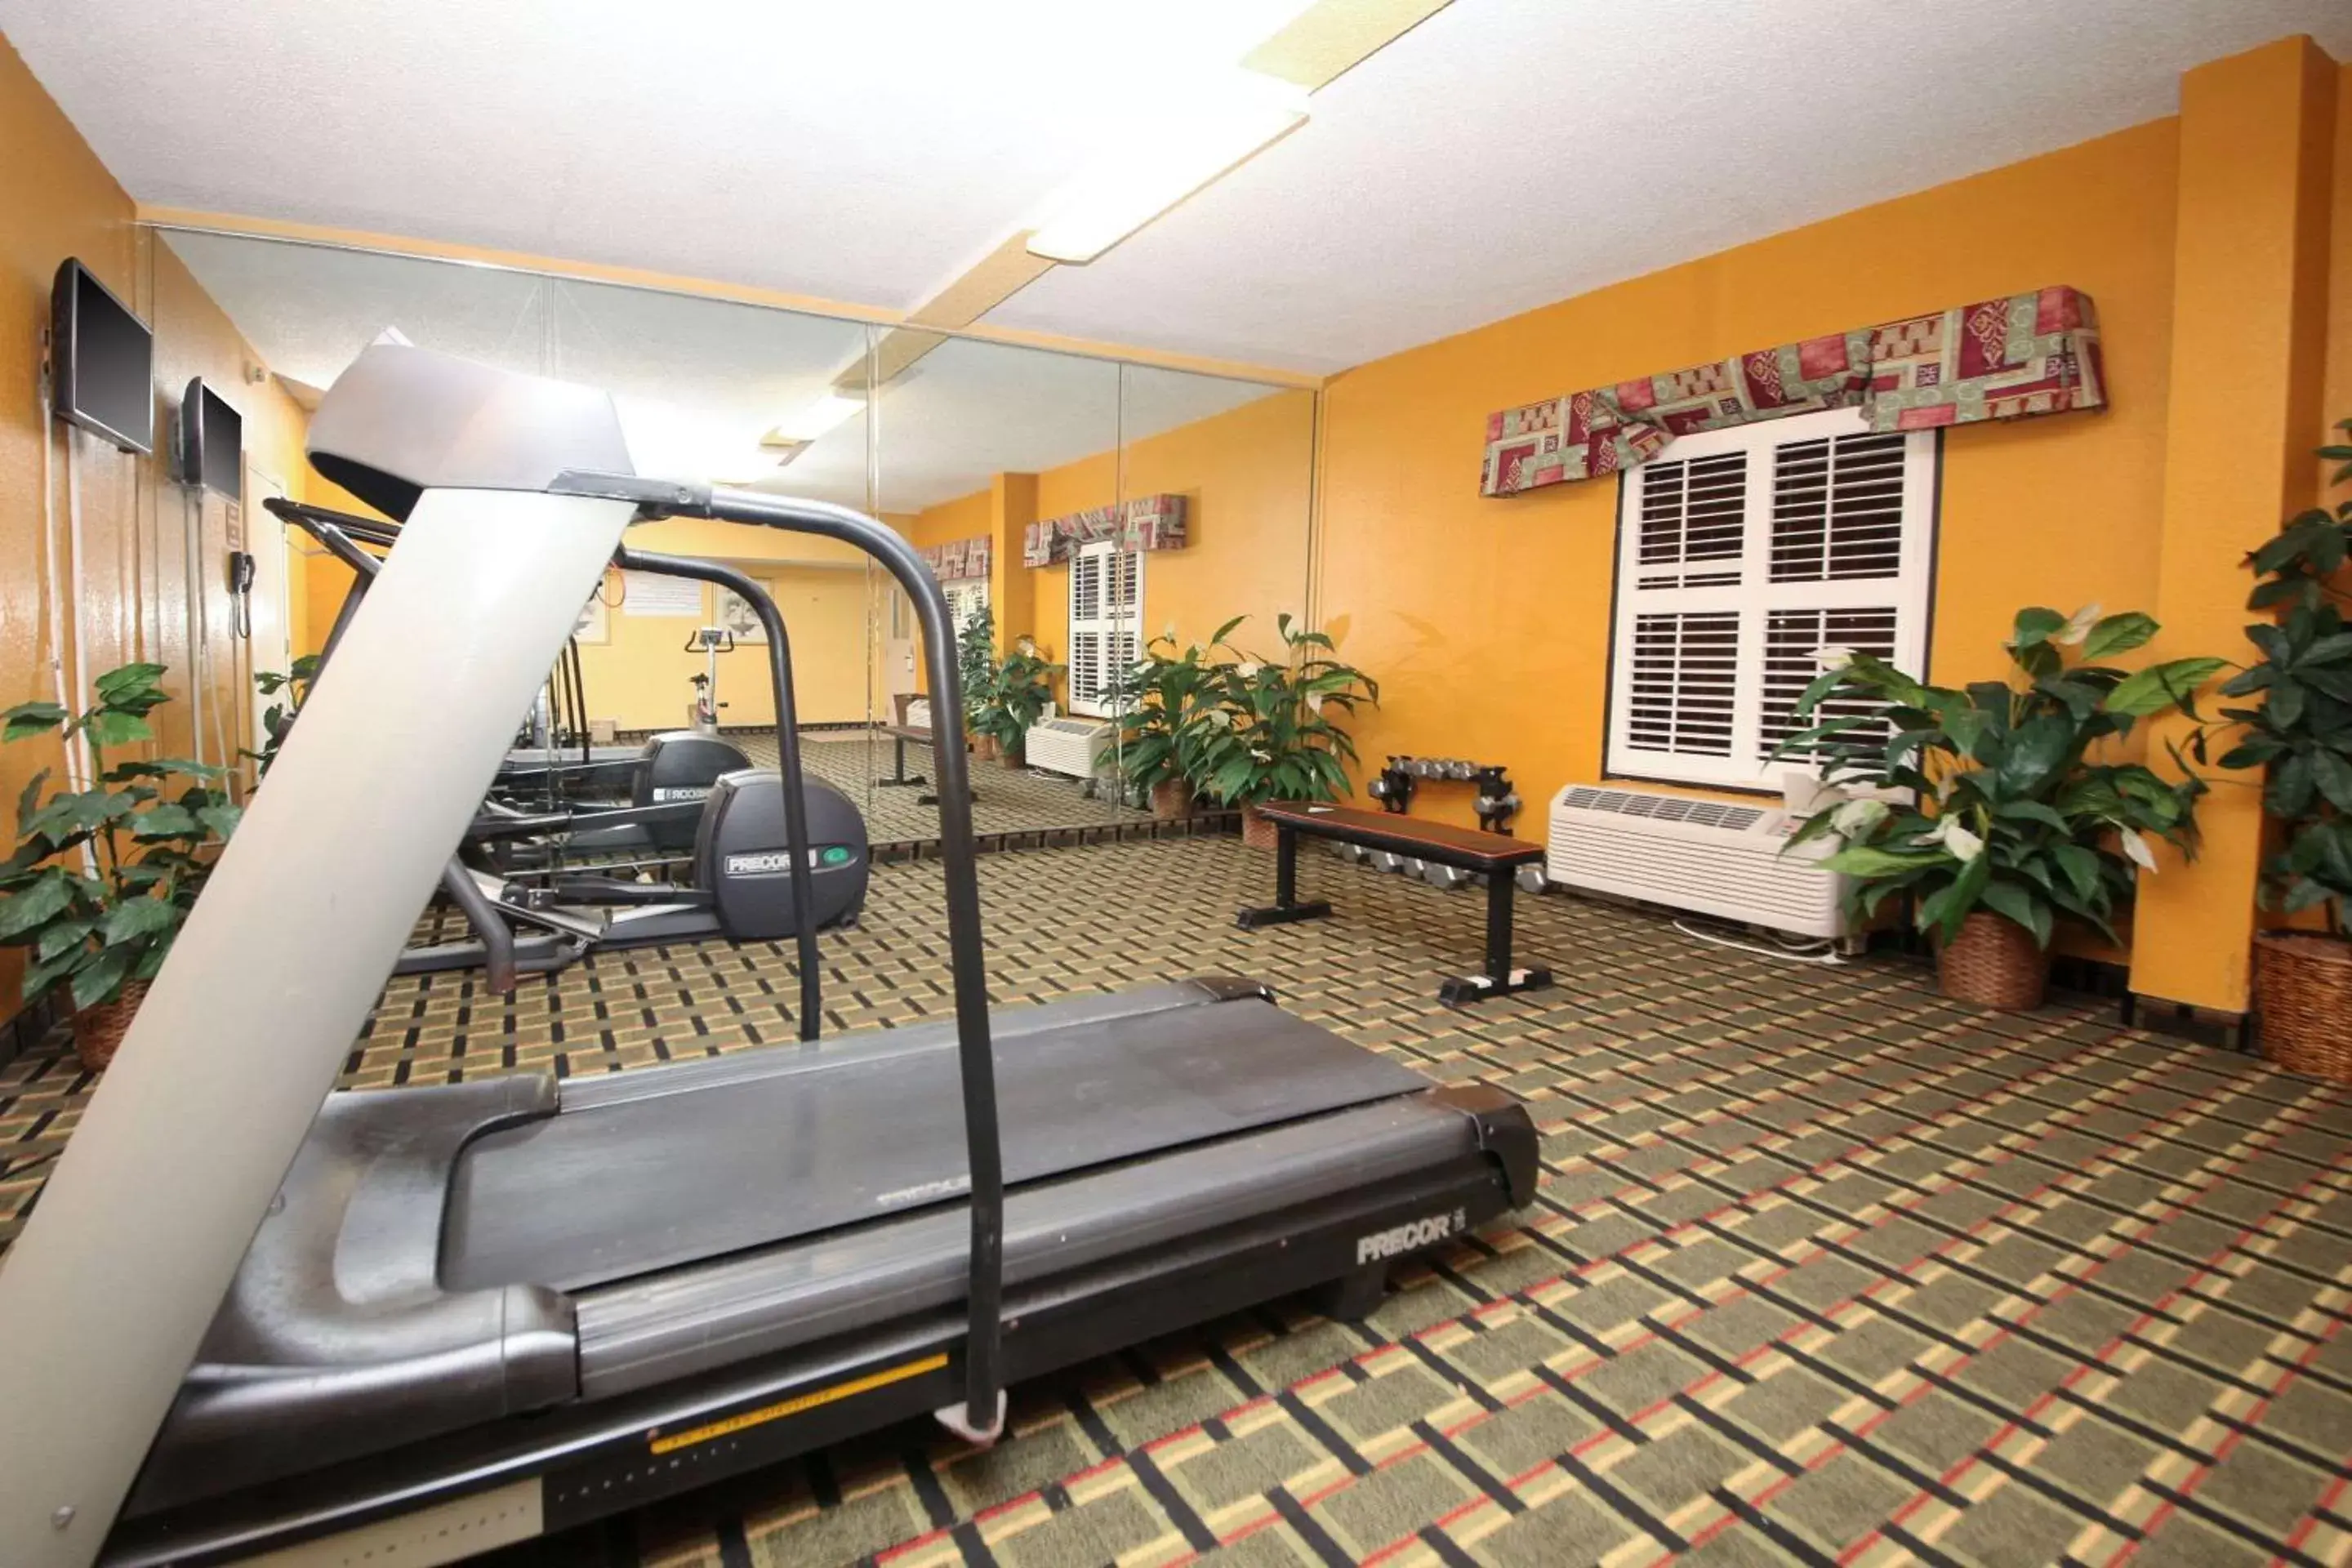 Fitness centre/facilities, Fitness Center/Facilities in Quality Inn Orange Park Jacksonville